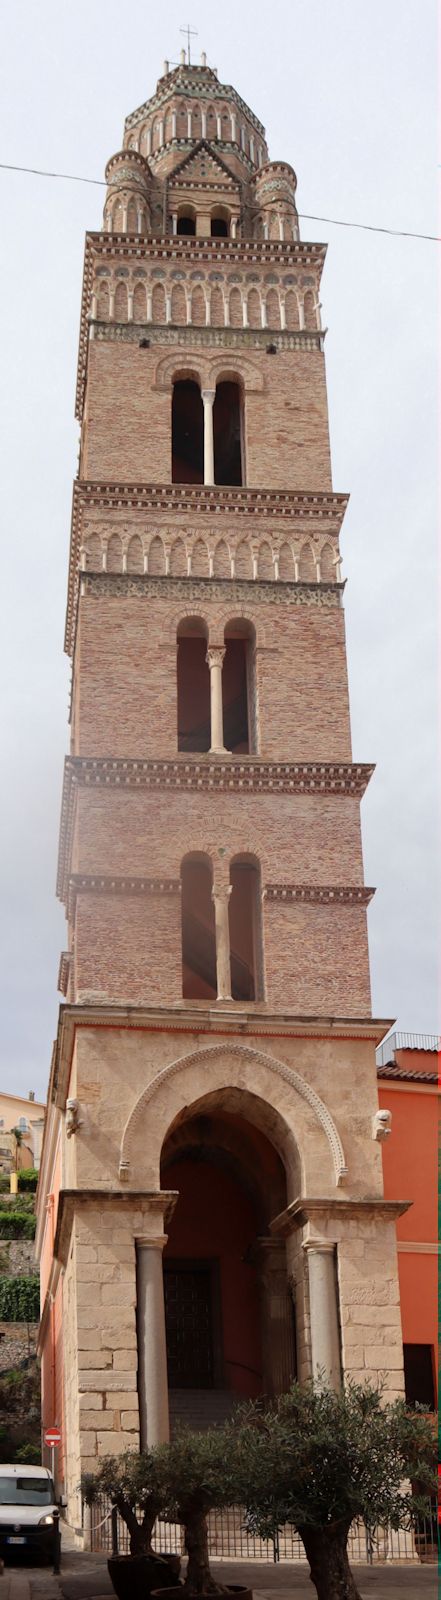 Turm der Kathedrale in Gaeta